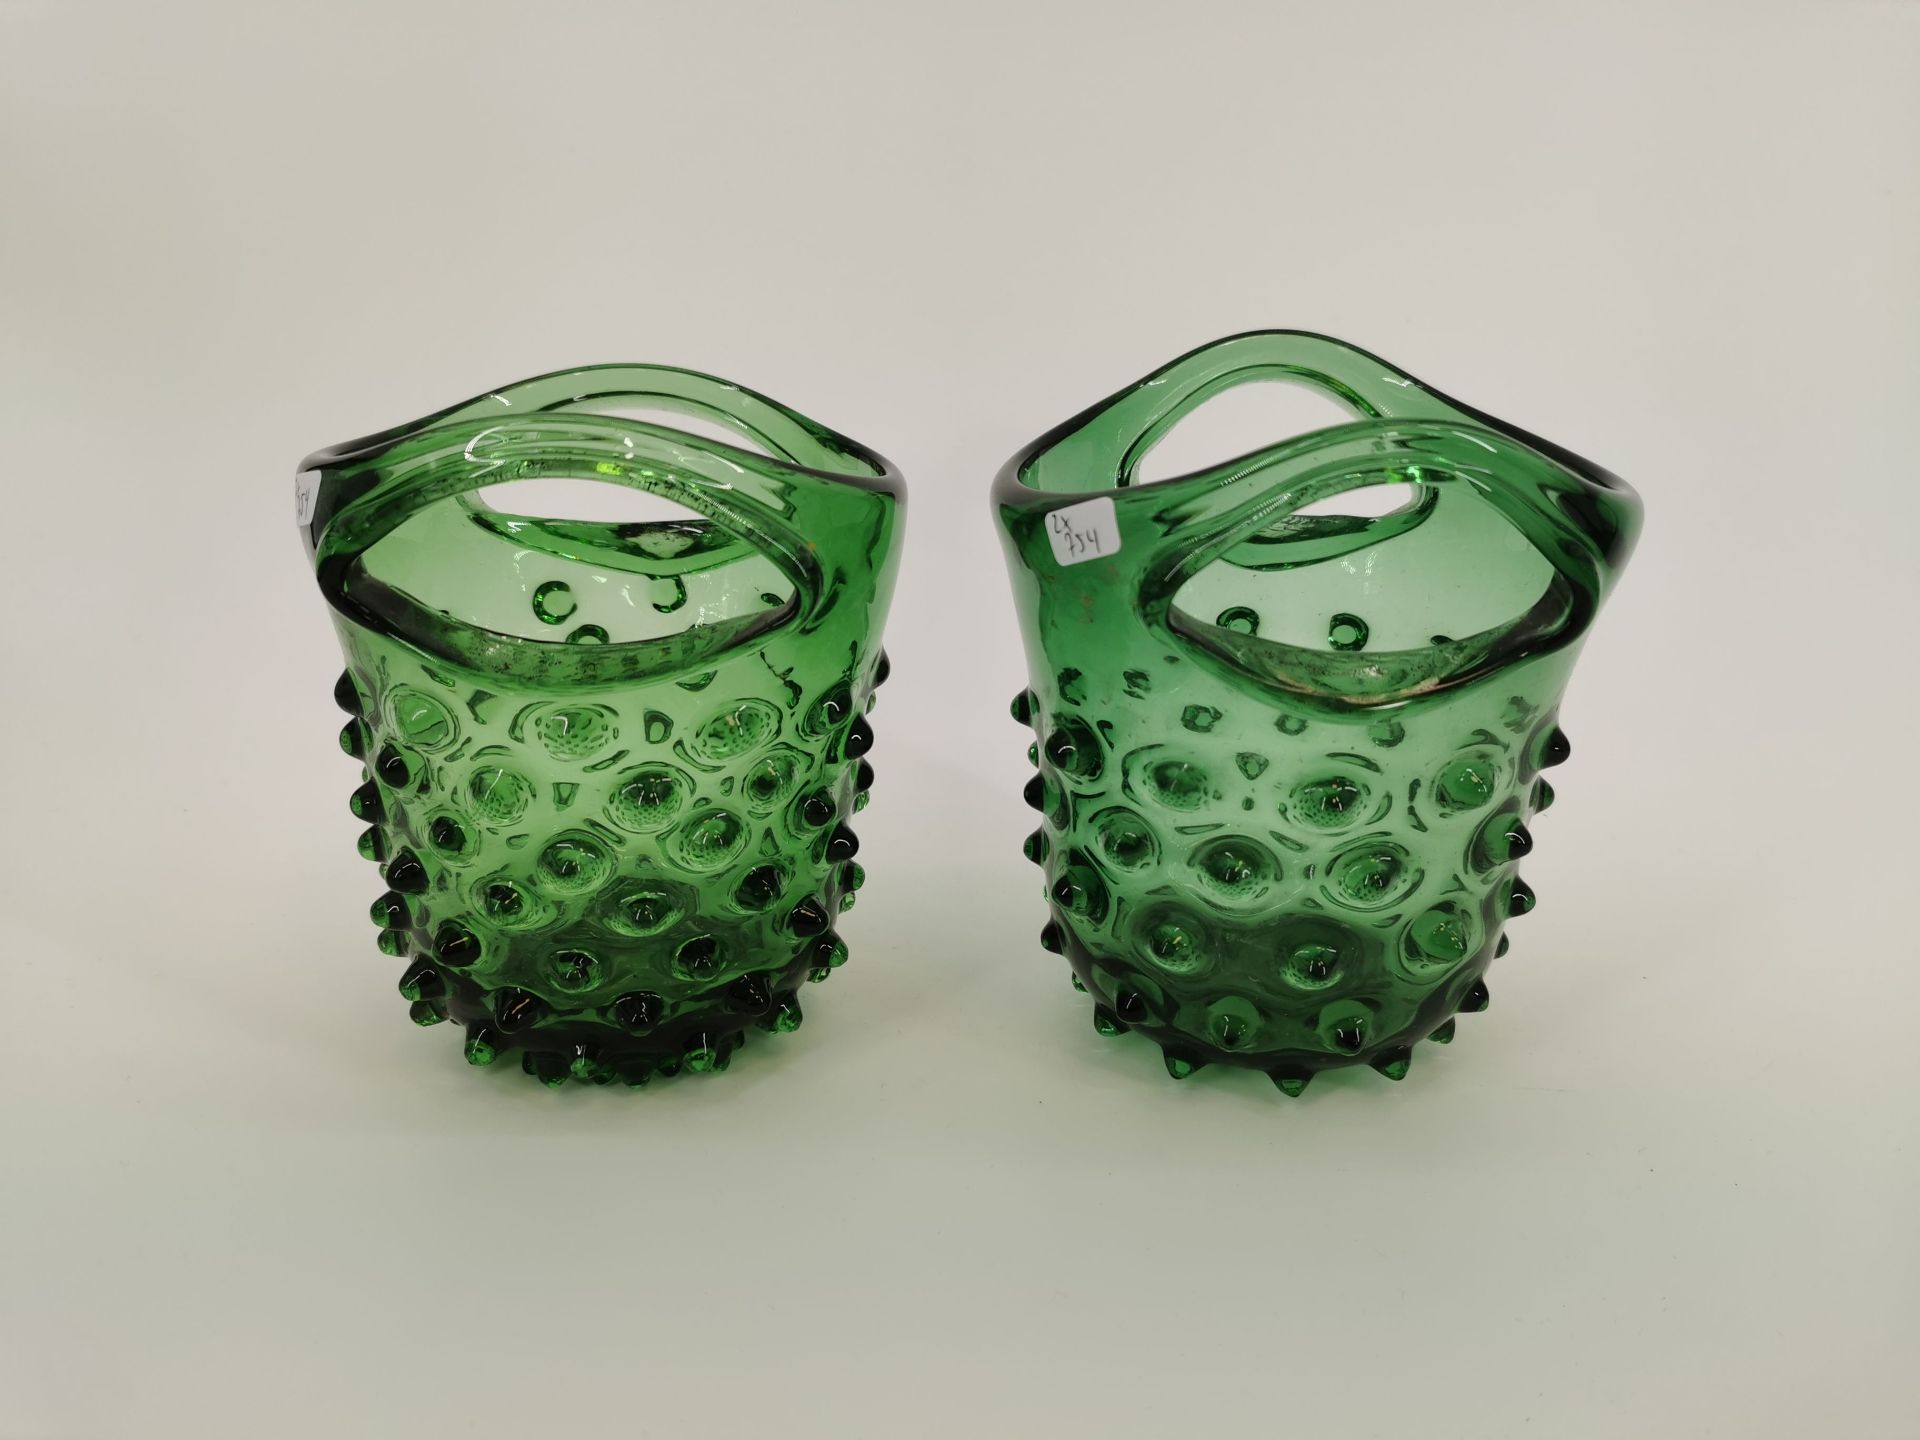 2 BURL GLASS HANDLED VASES - Image 2 of 4